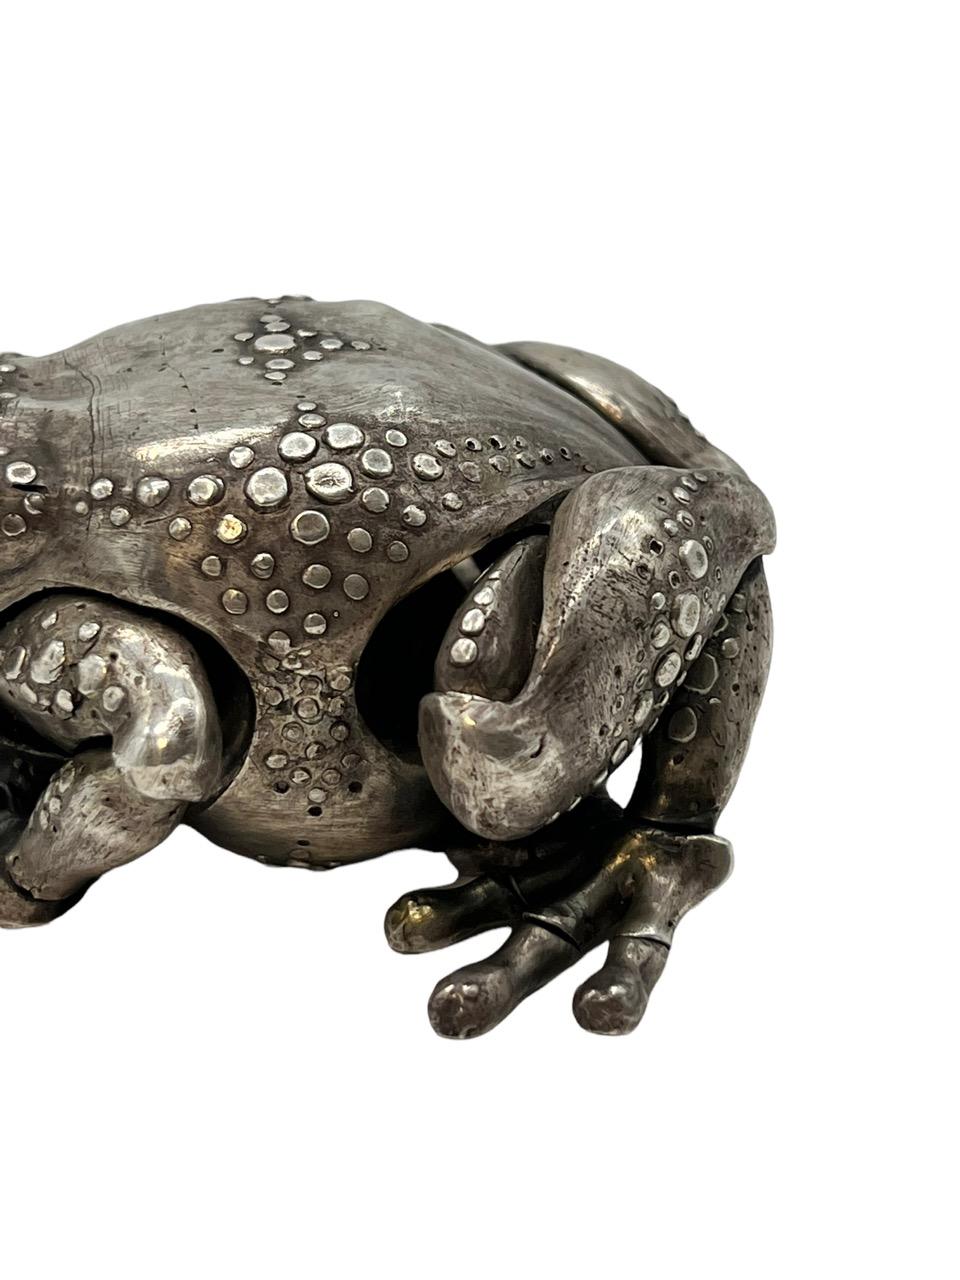 Oleg Konstantinov Fully Articulated Frog Made of Sterling Silver For Sale 4